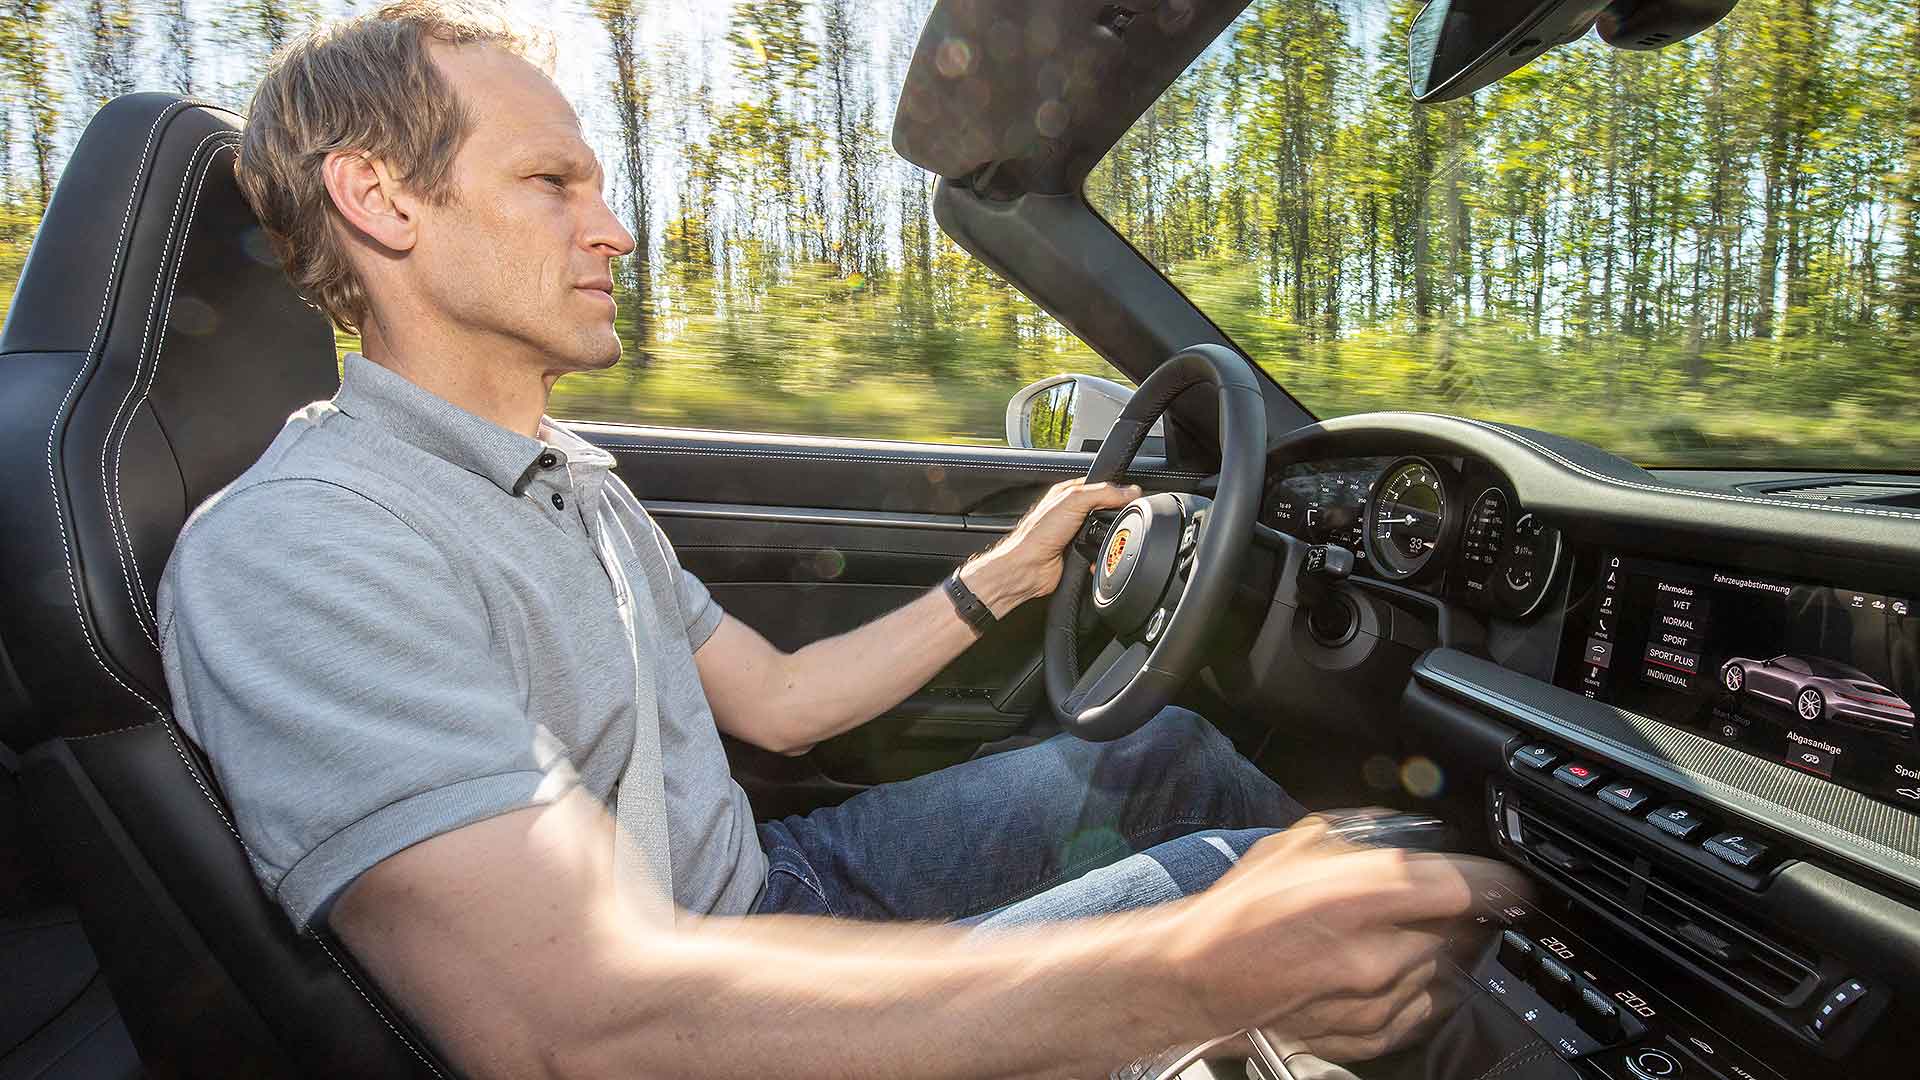 Porsche 911 7-speed manaul gearbox 'for purists'